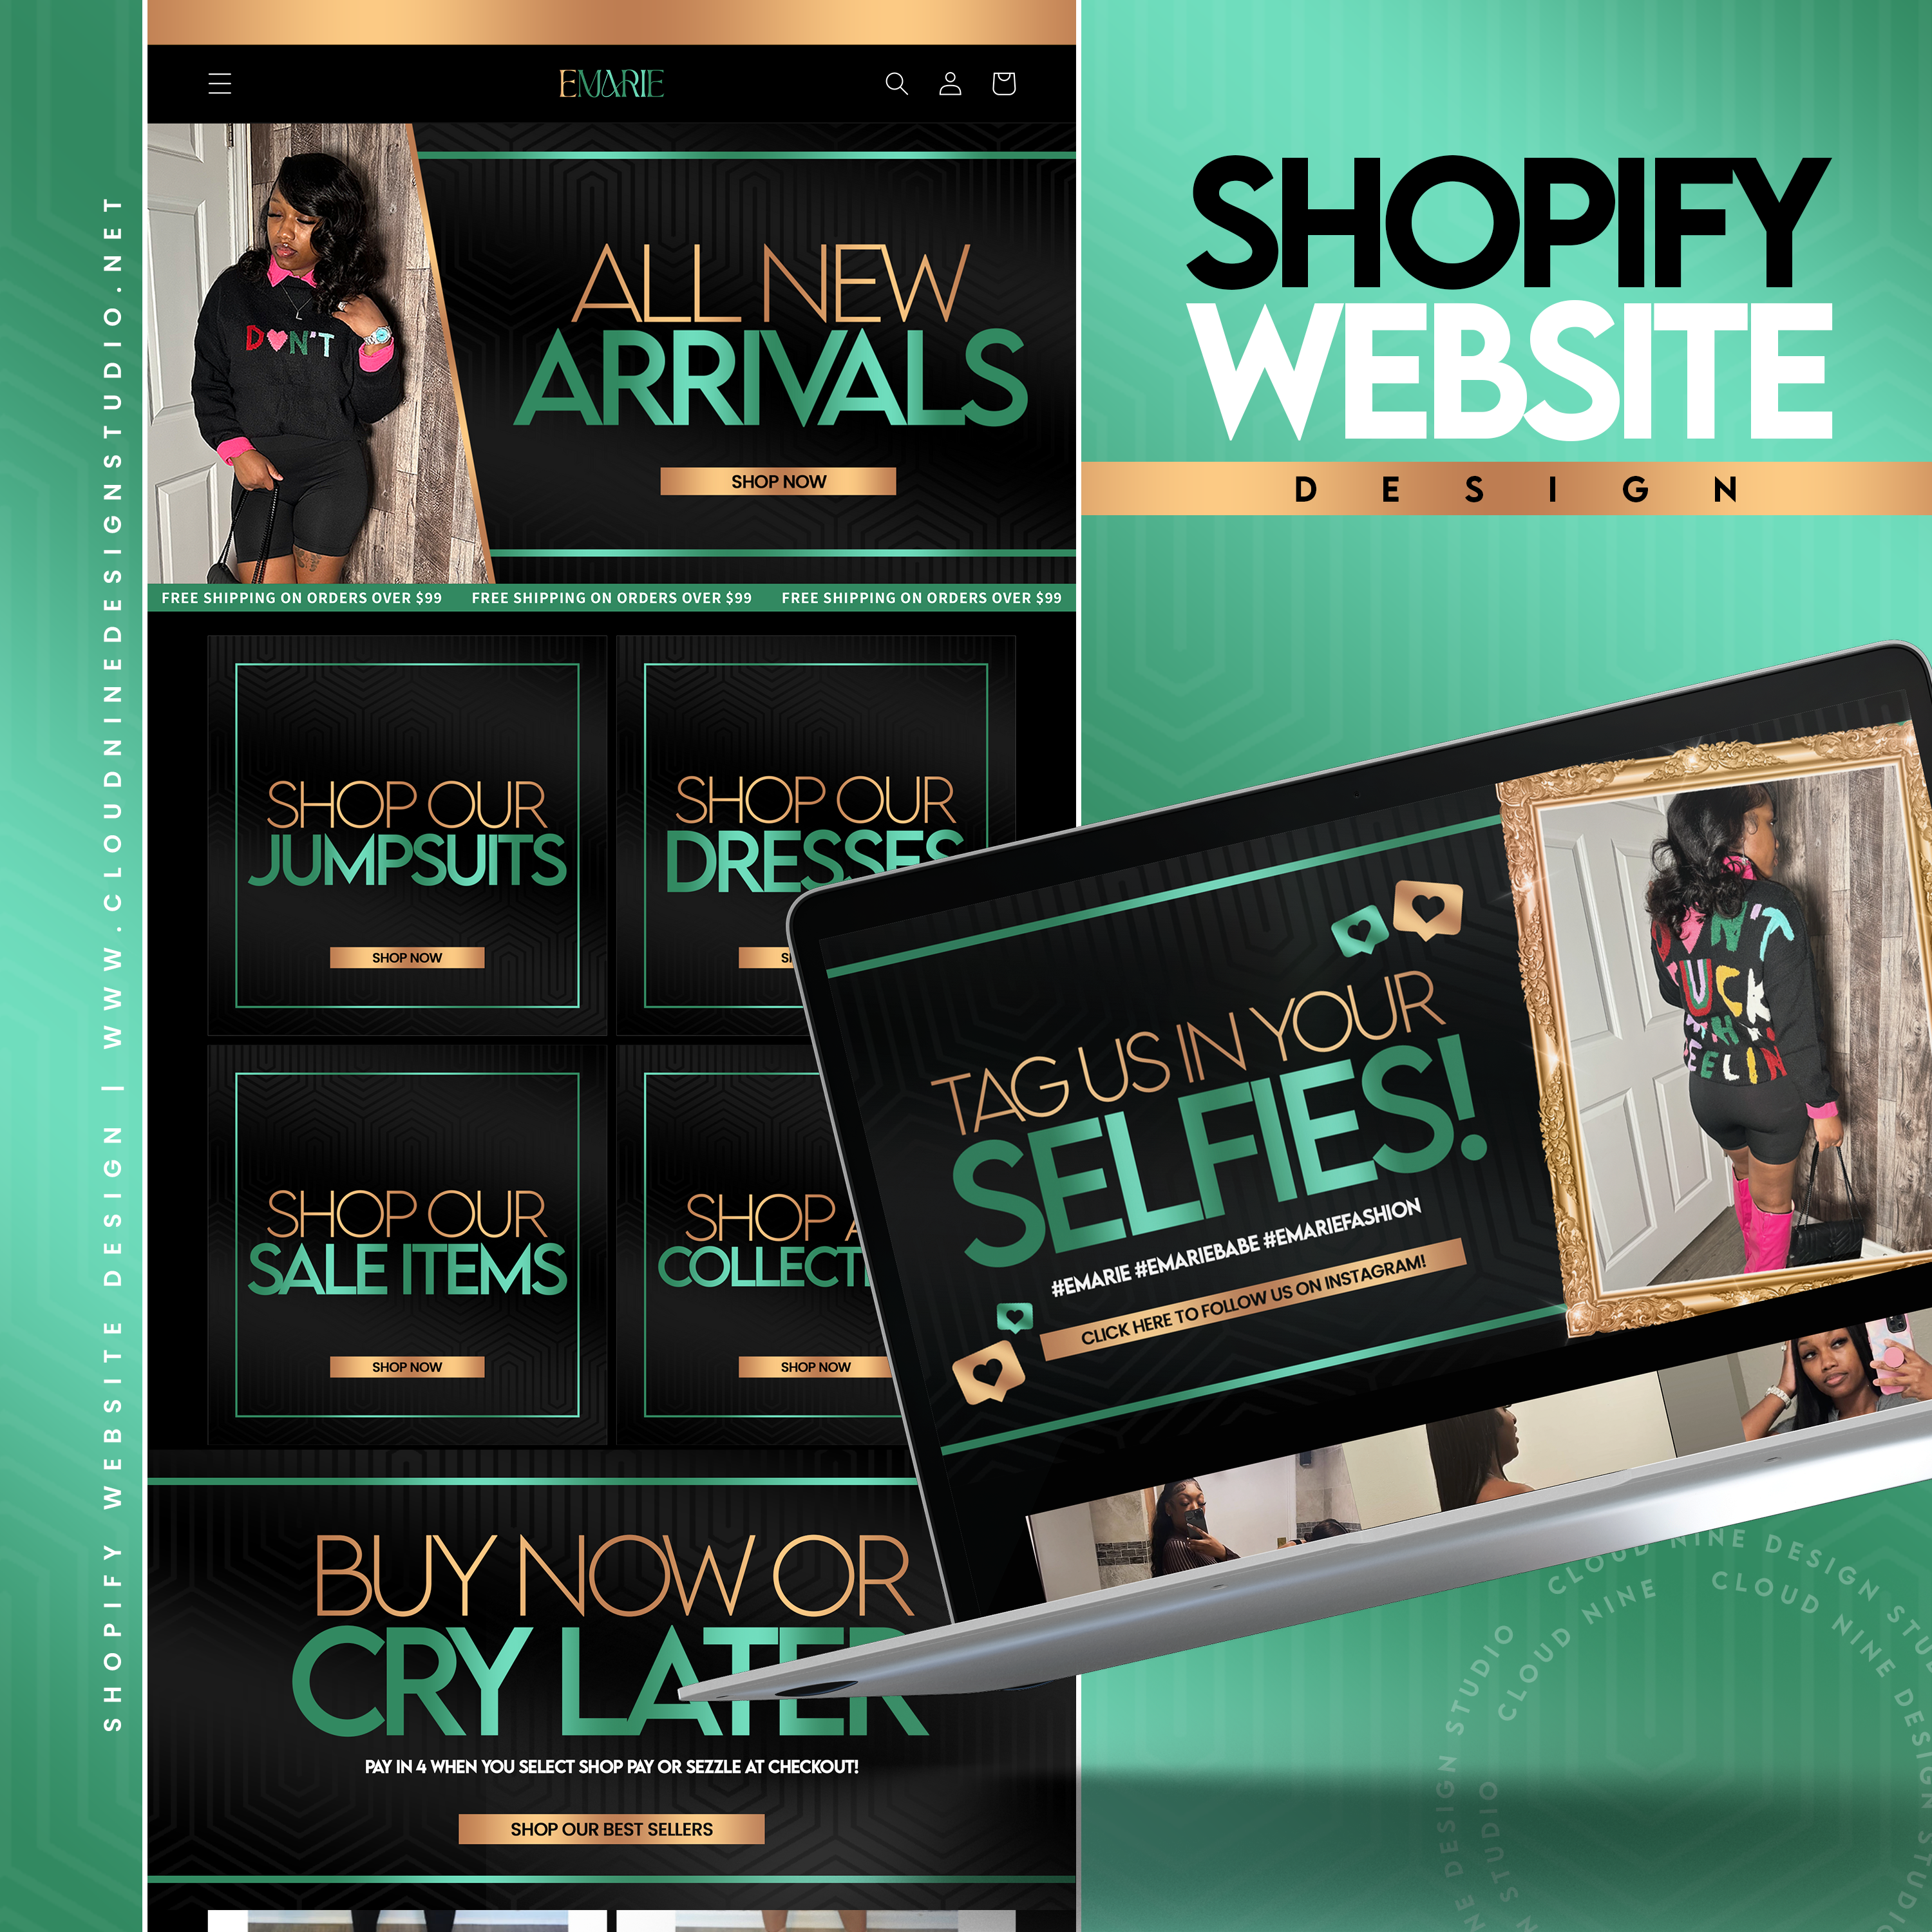 Shopify Homepage Revamp